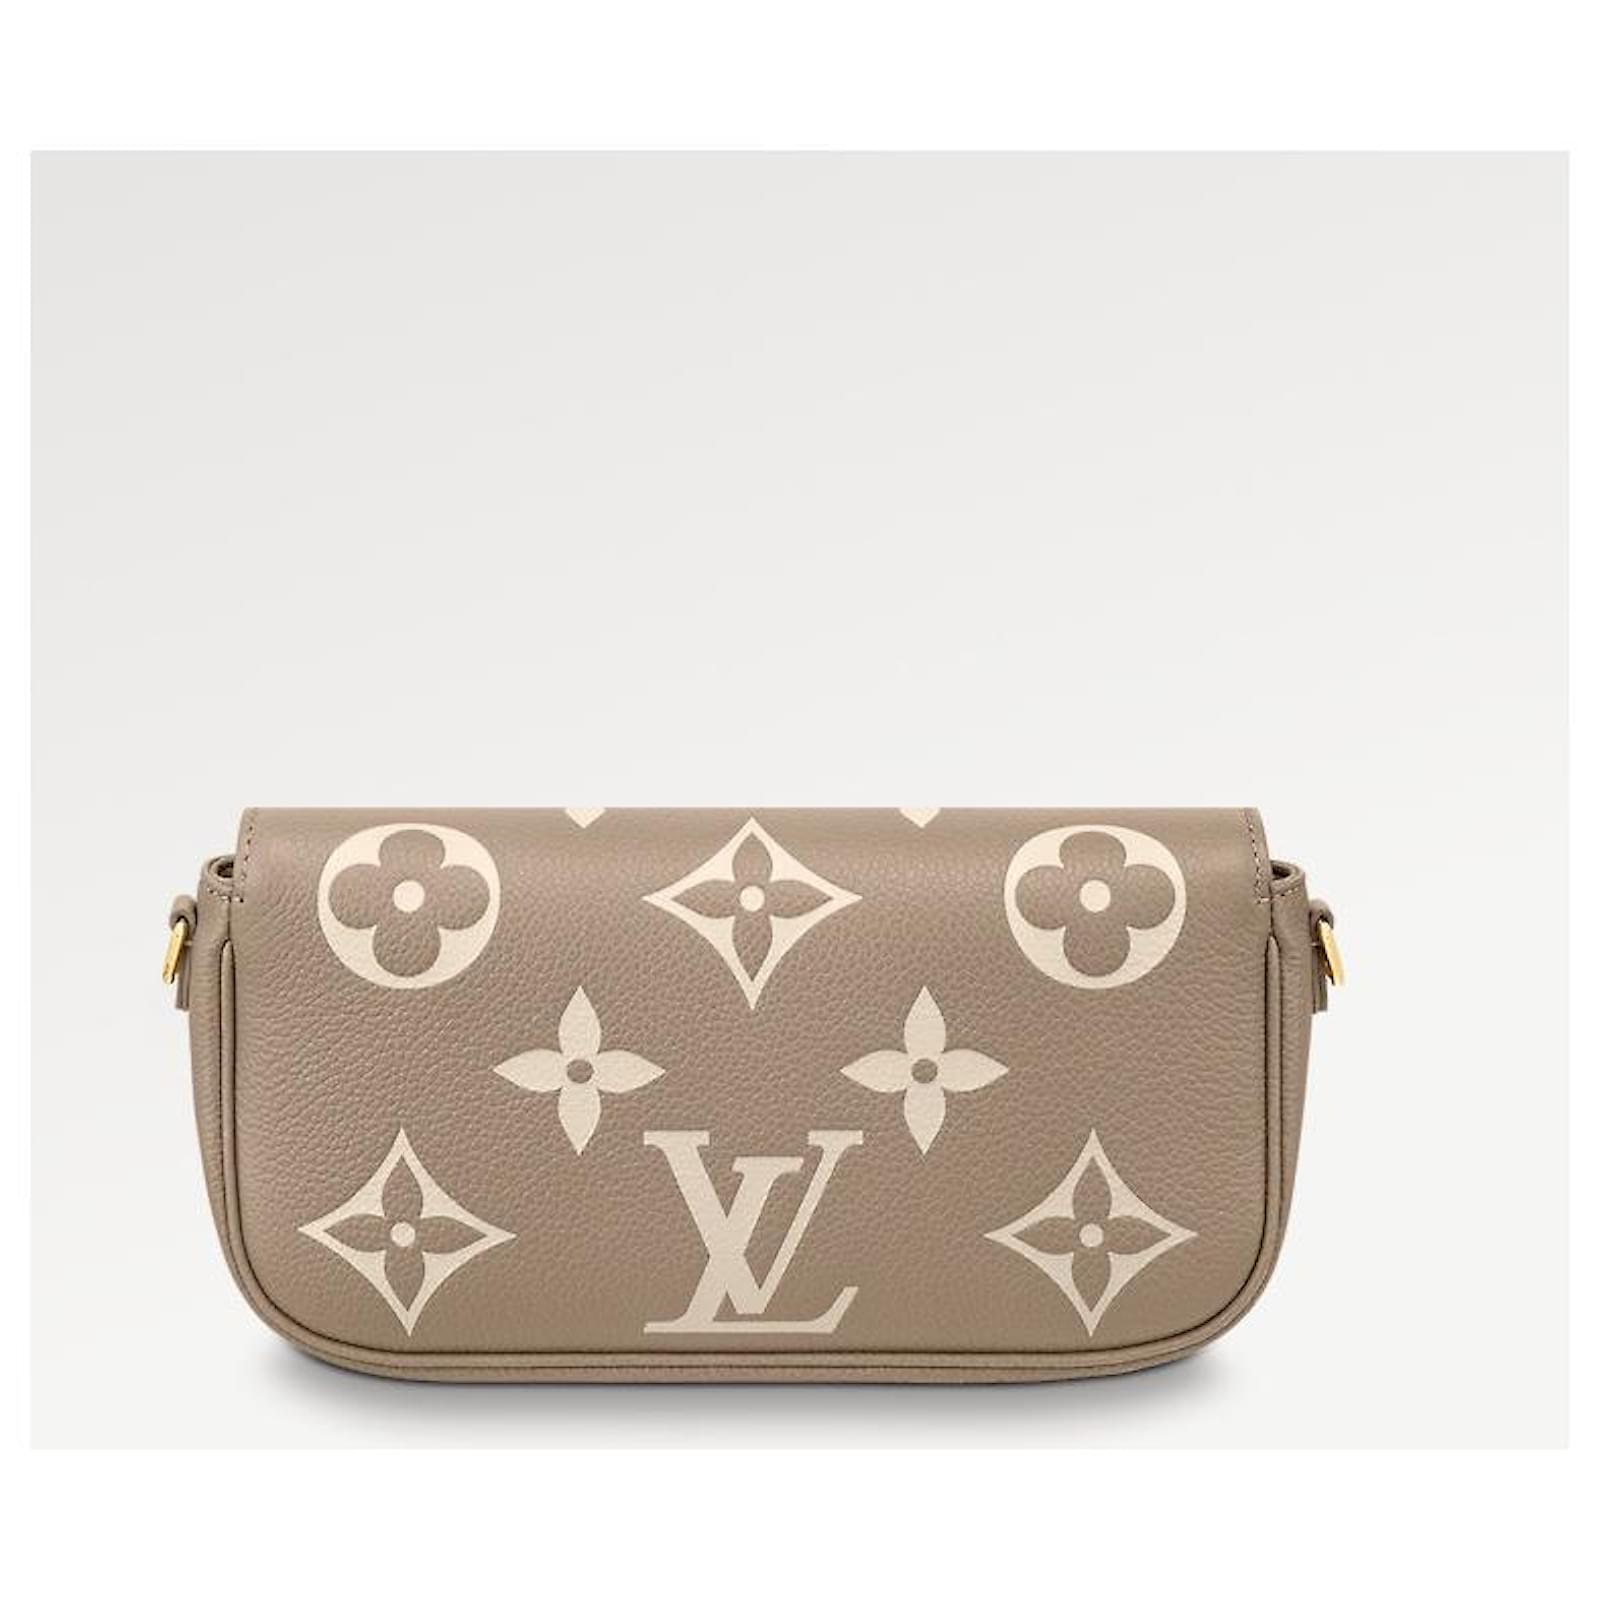 My first luxury handbag: Wallet on Chain Ivy in Monogram Canvas